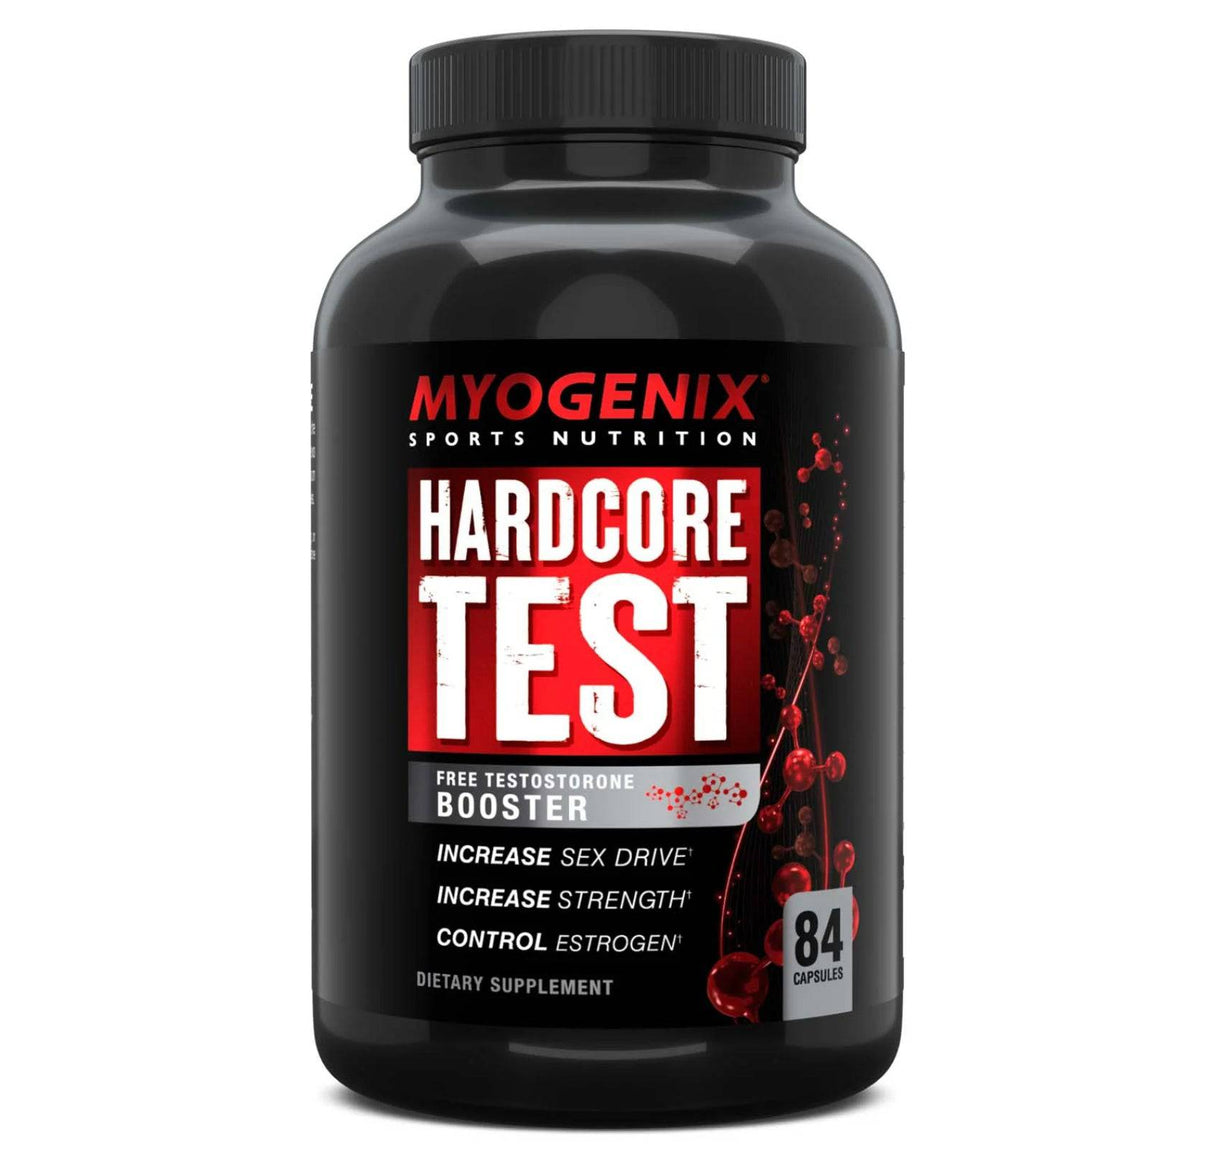 Hardcore Test - Myogenix - Prime Sports Nutrition